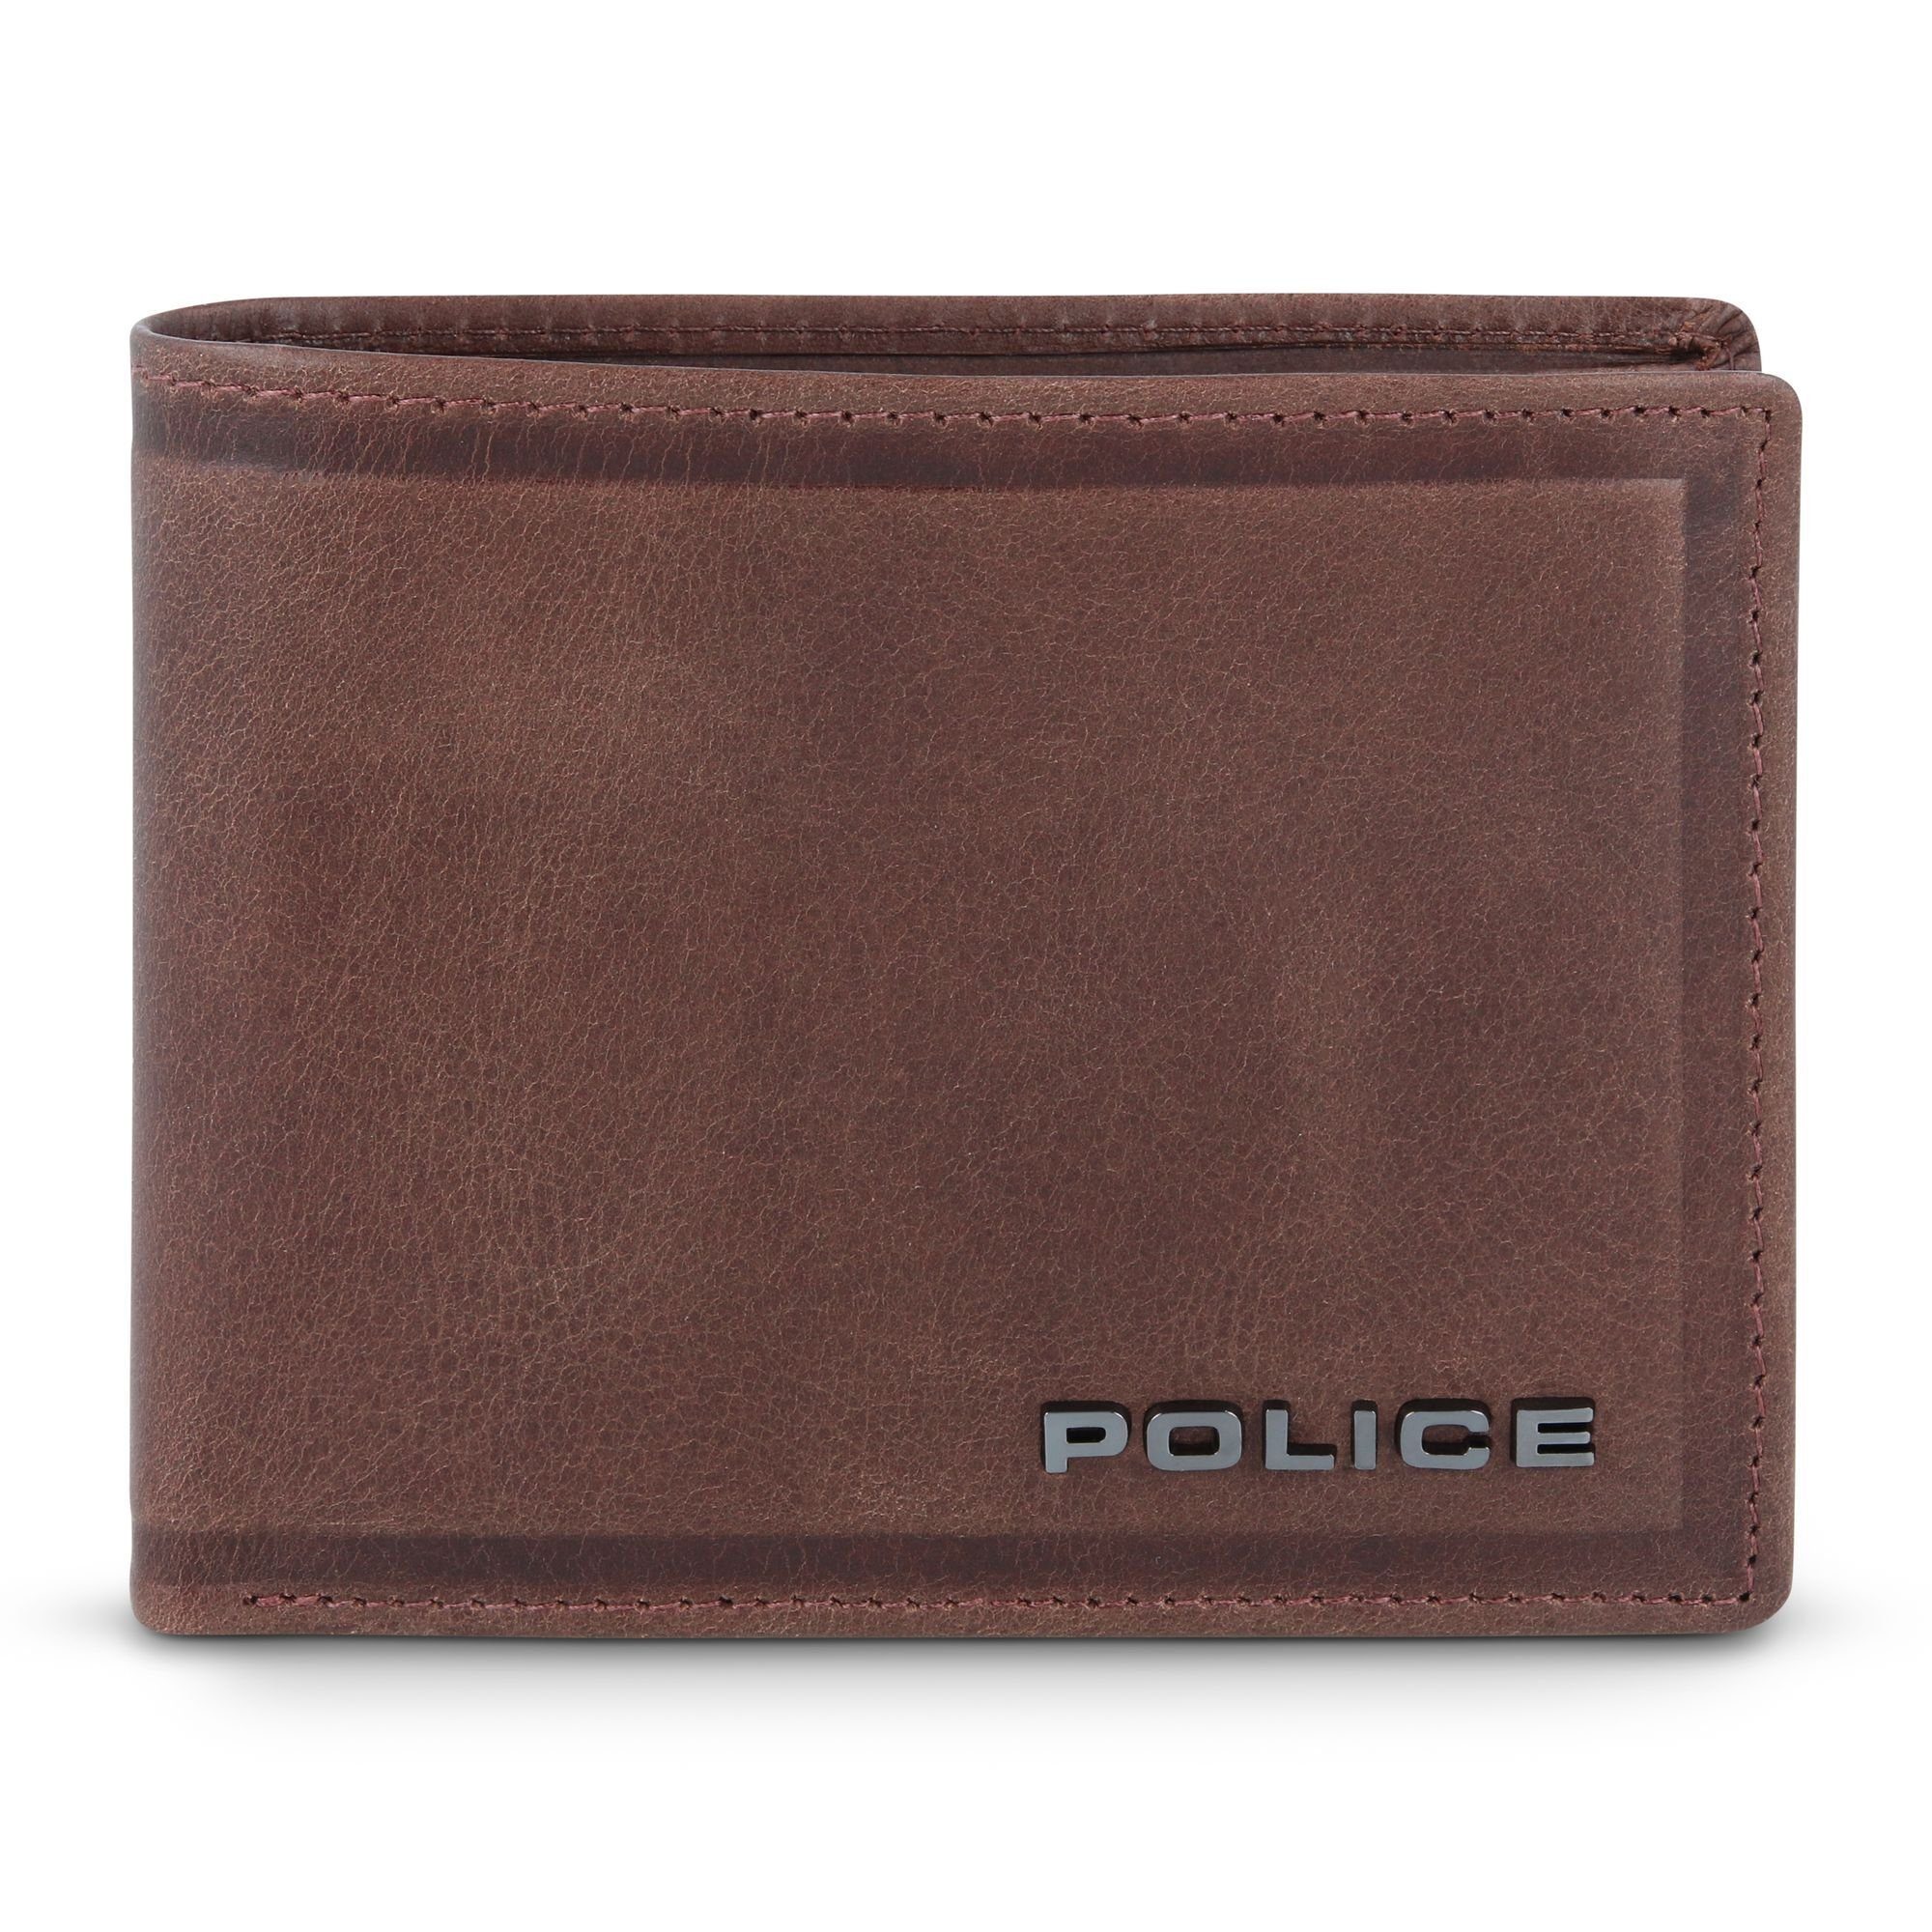 Police Leder Geldbörse, brown